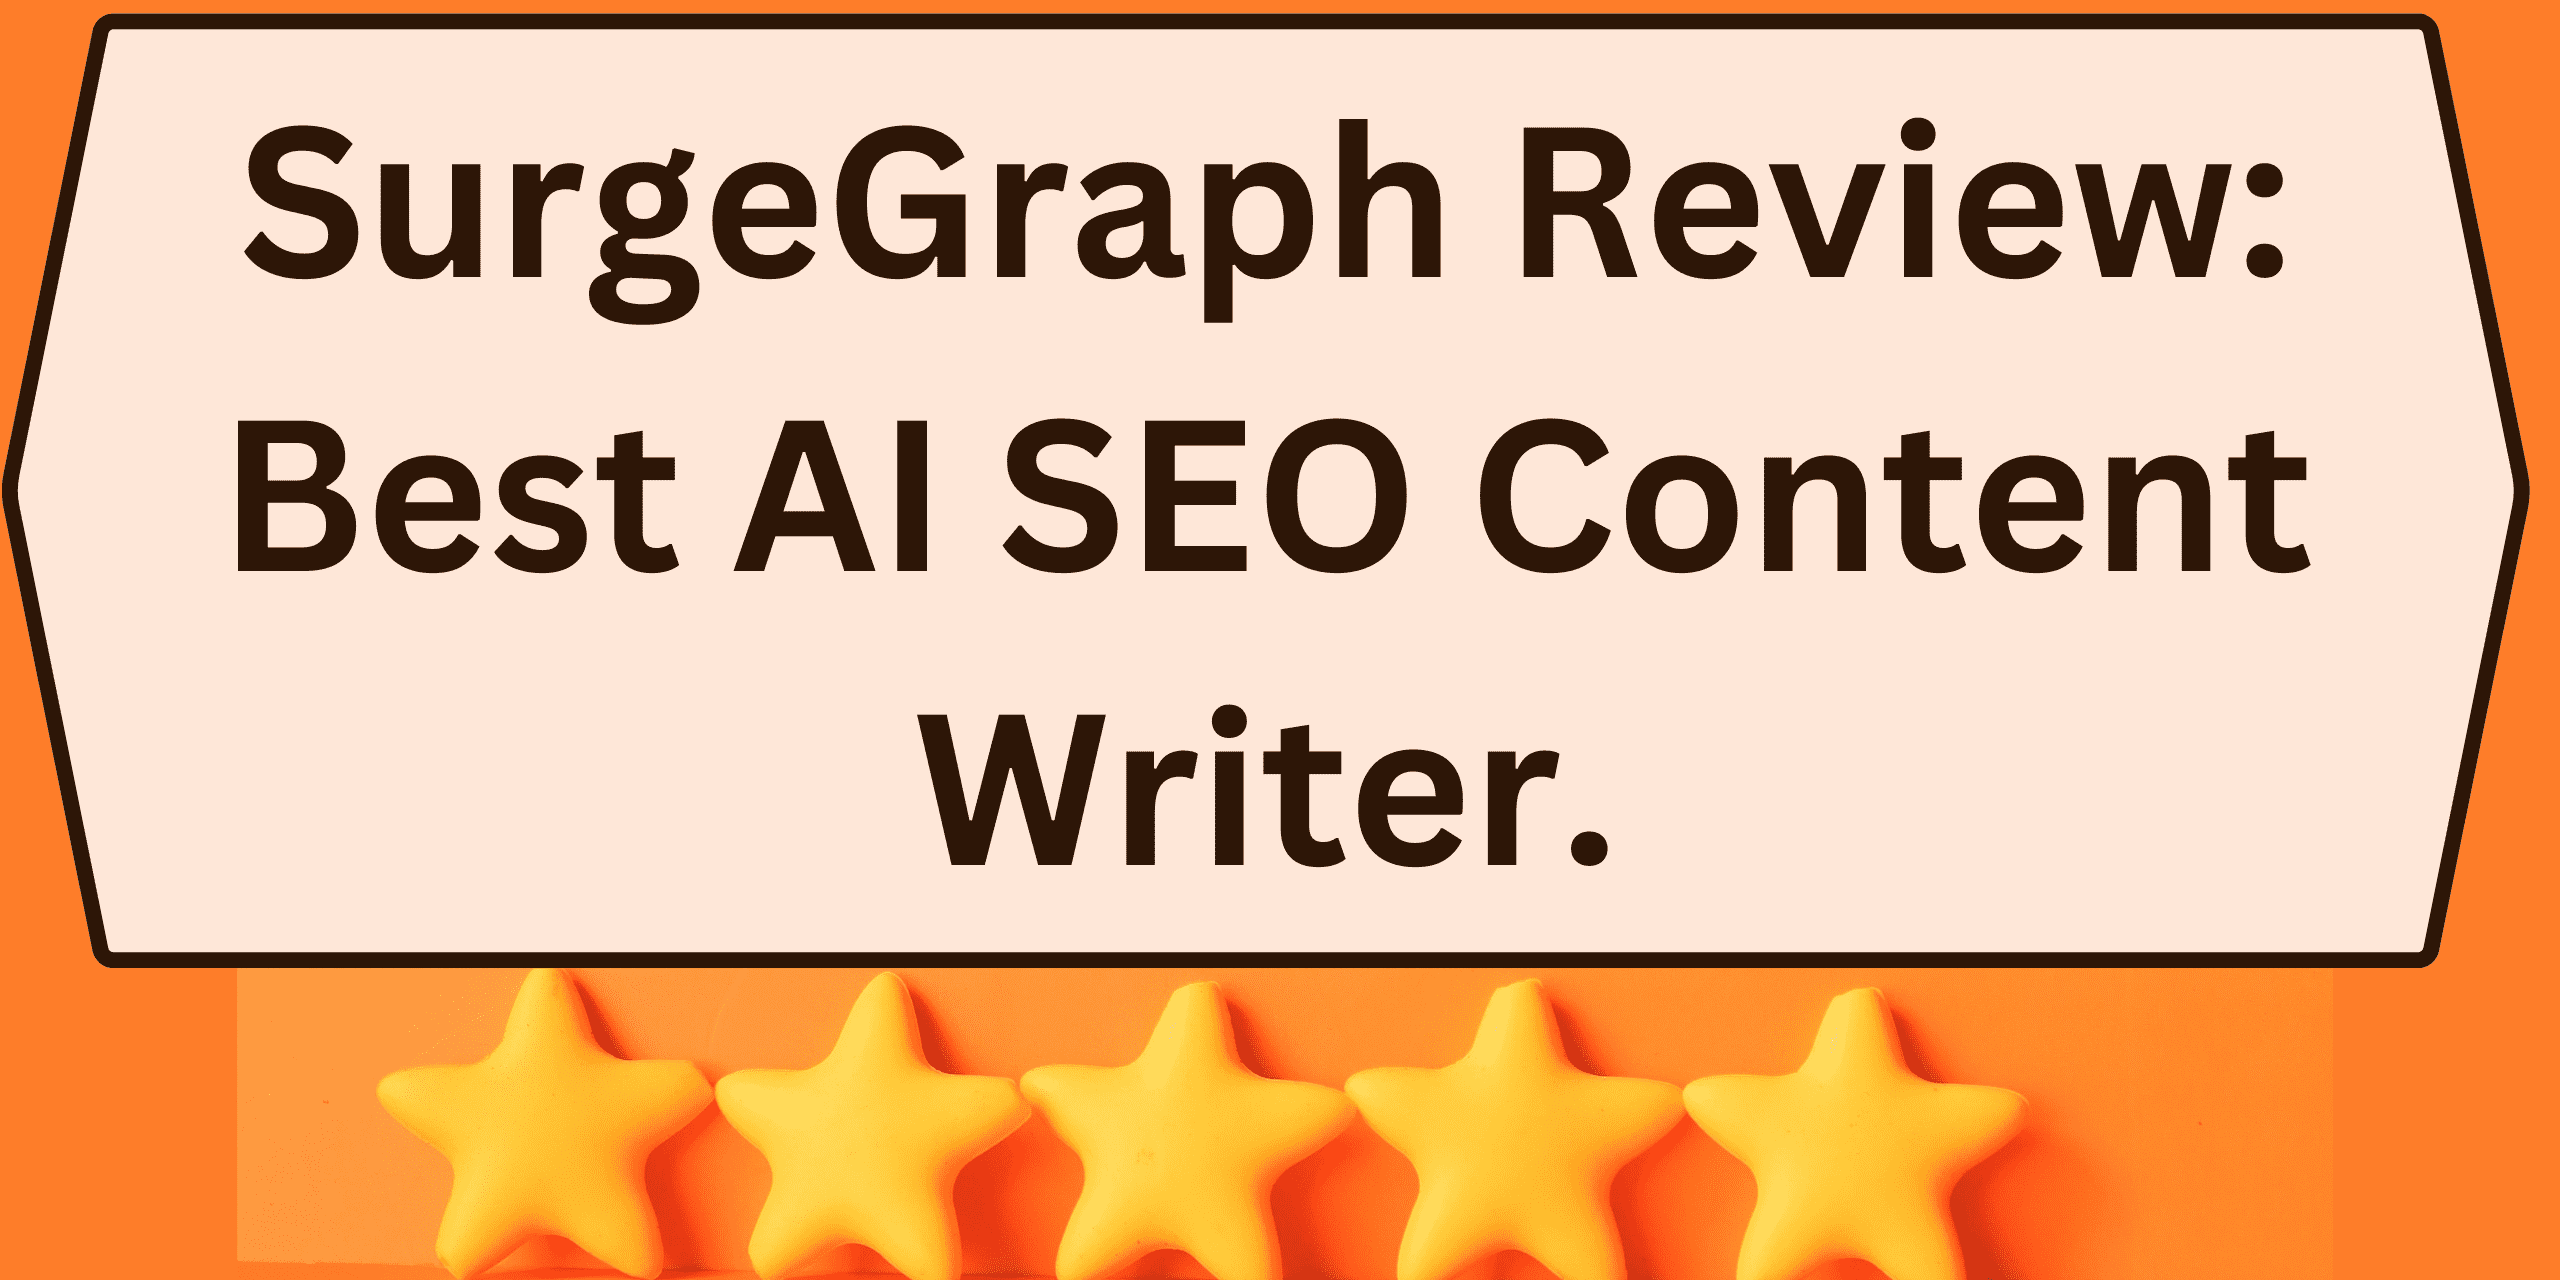 alt="SurgeGraph Review: Best AI SEO Content Writer"